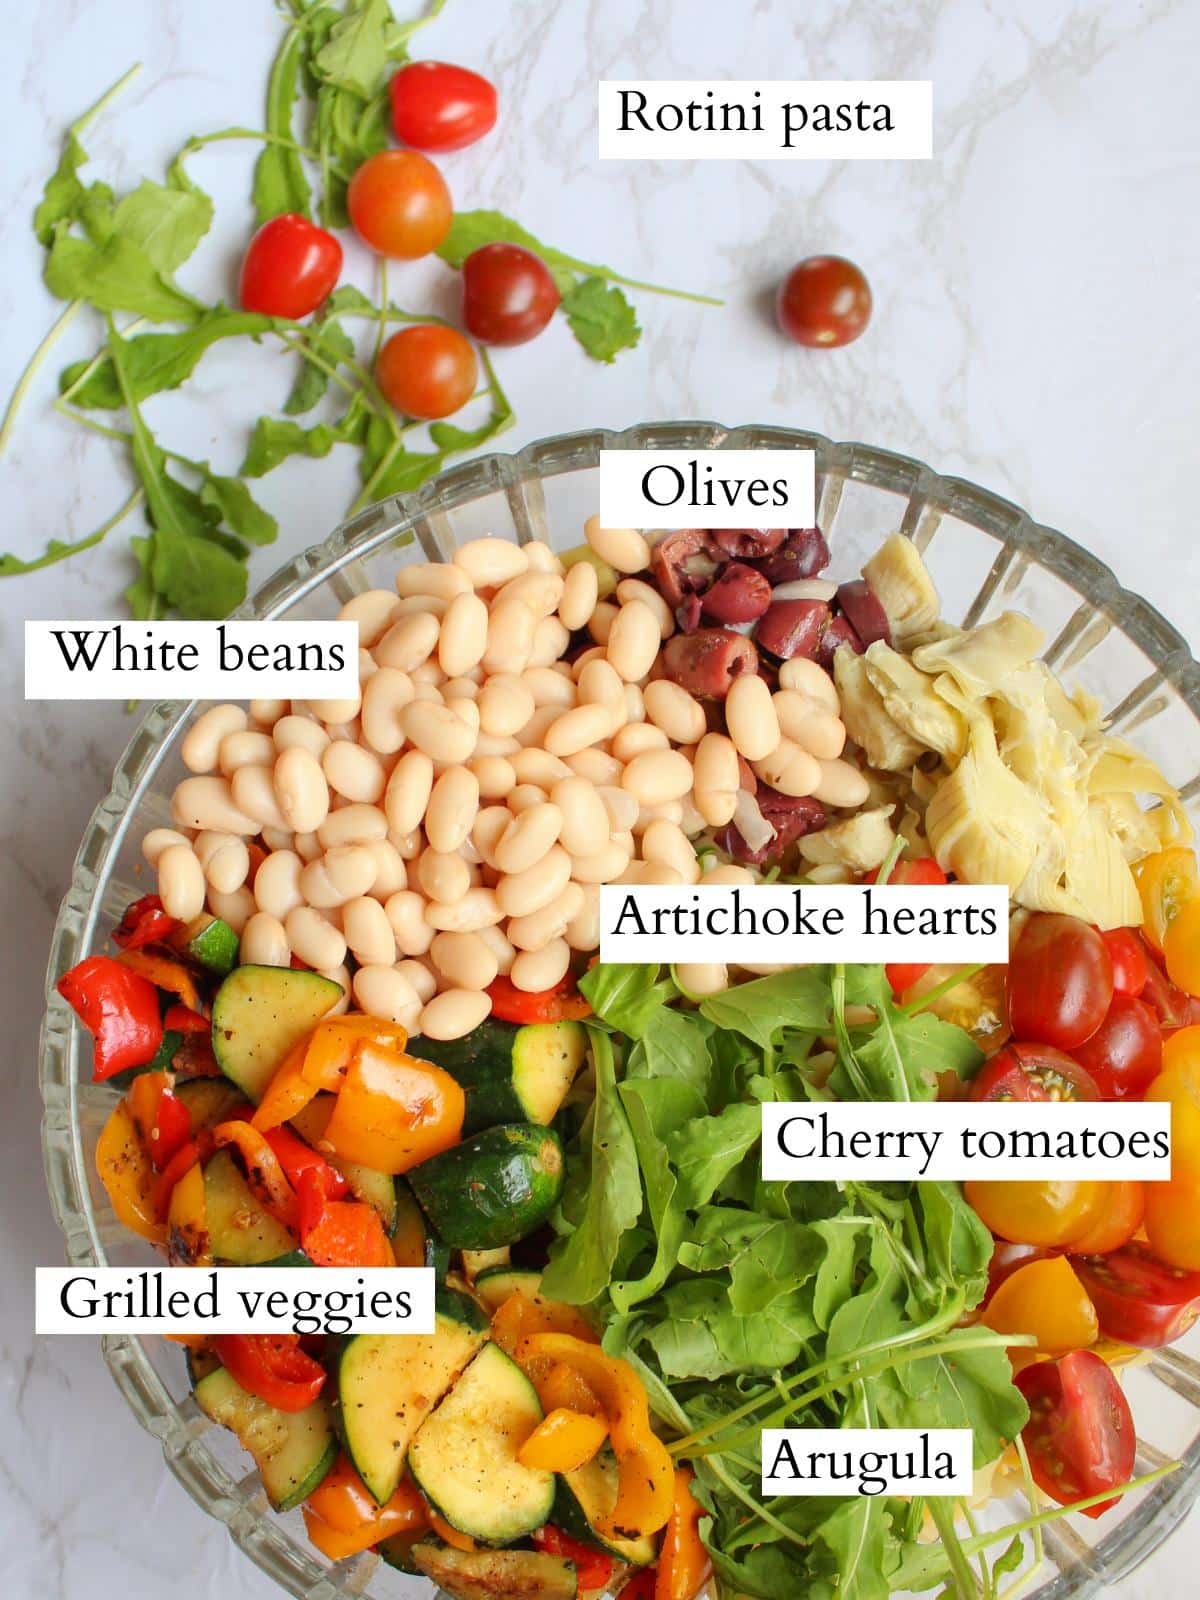 Ingredients for grilled veggie pasta salad arranged in a large glass serving bowl.